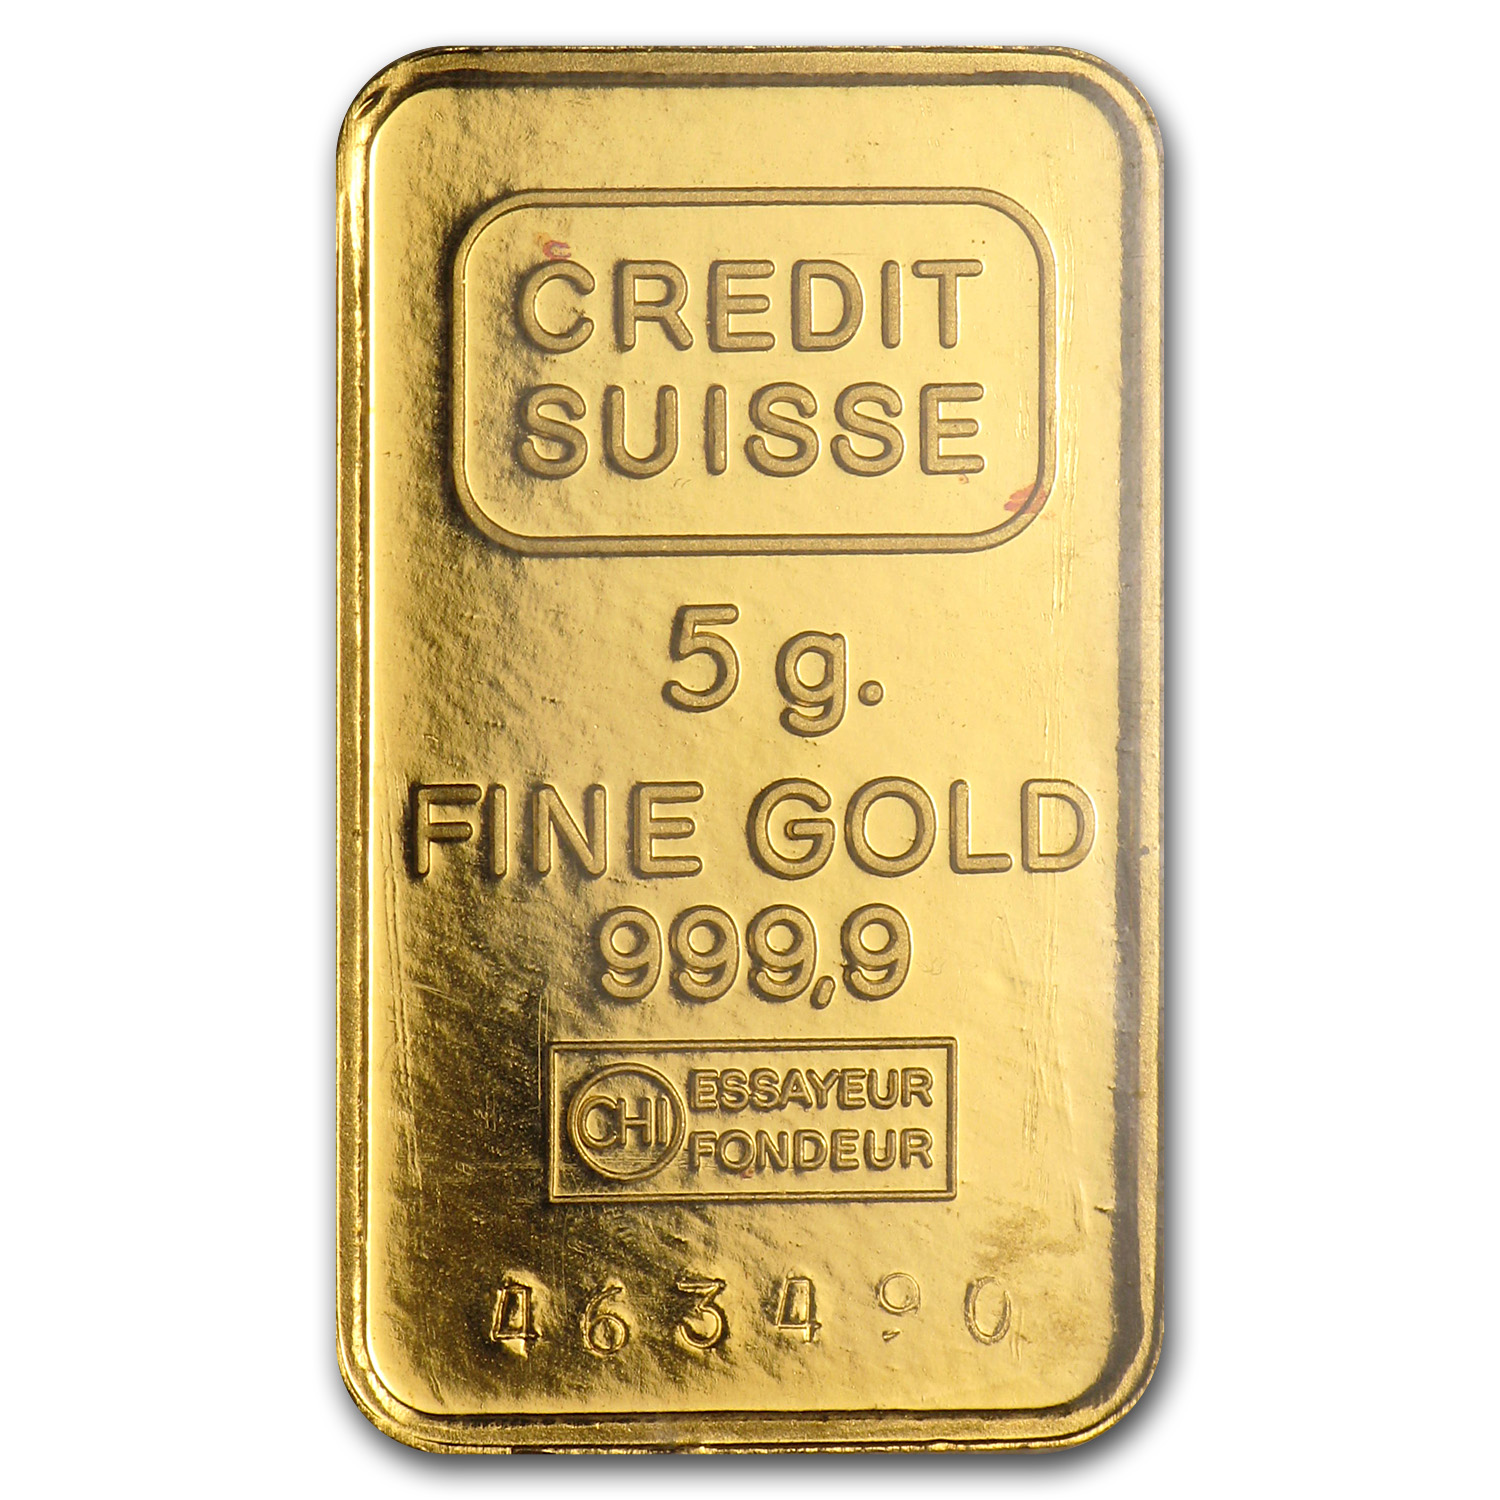 is credit suisse gold bar good